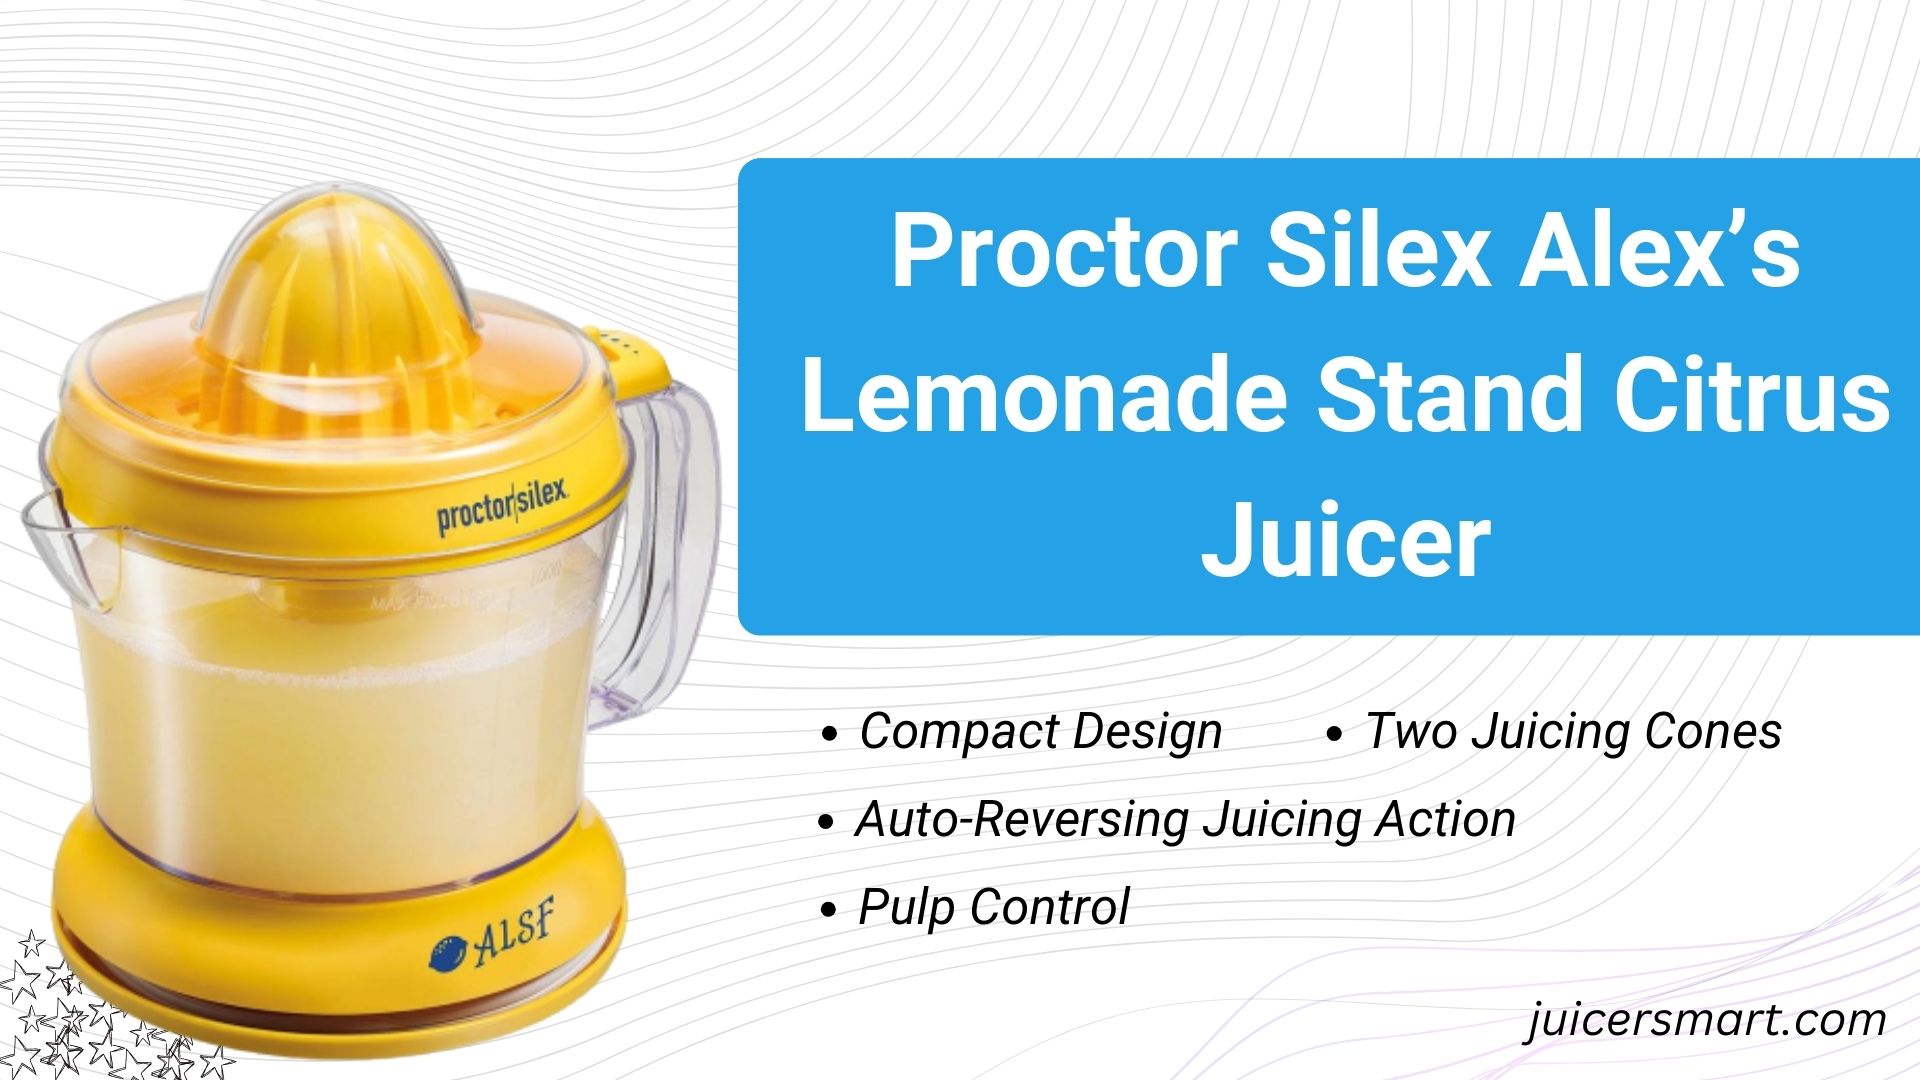 Proctor Silex Alex’s Lemonade Stand Citrus Juicer